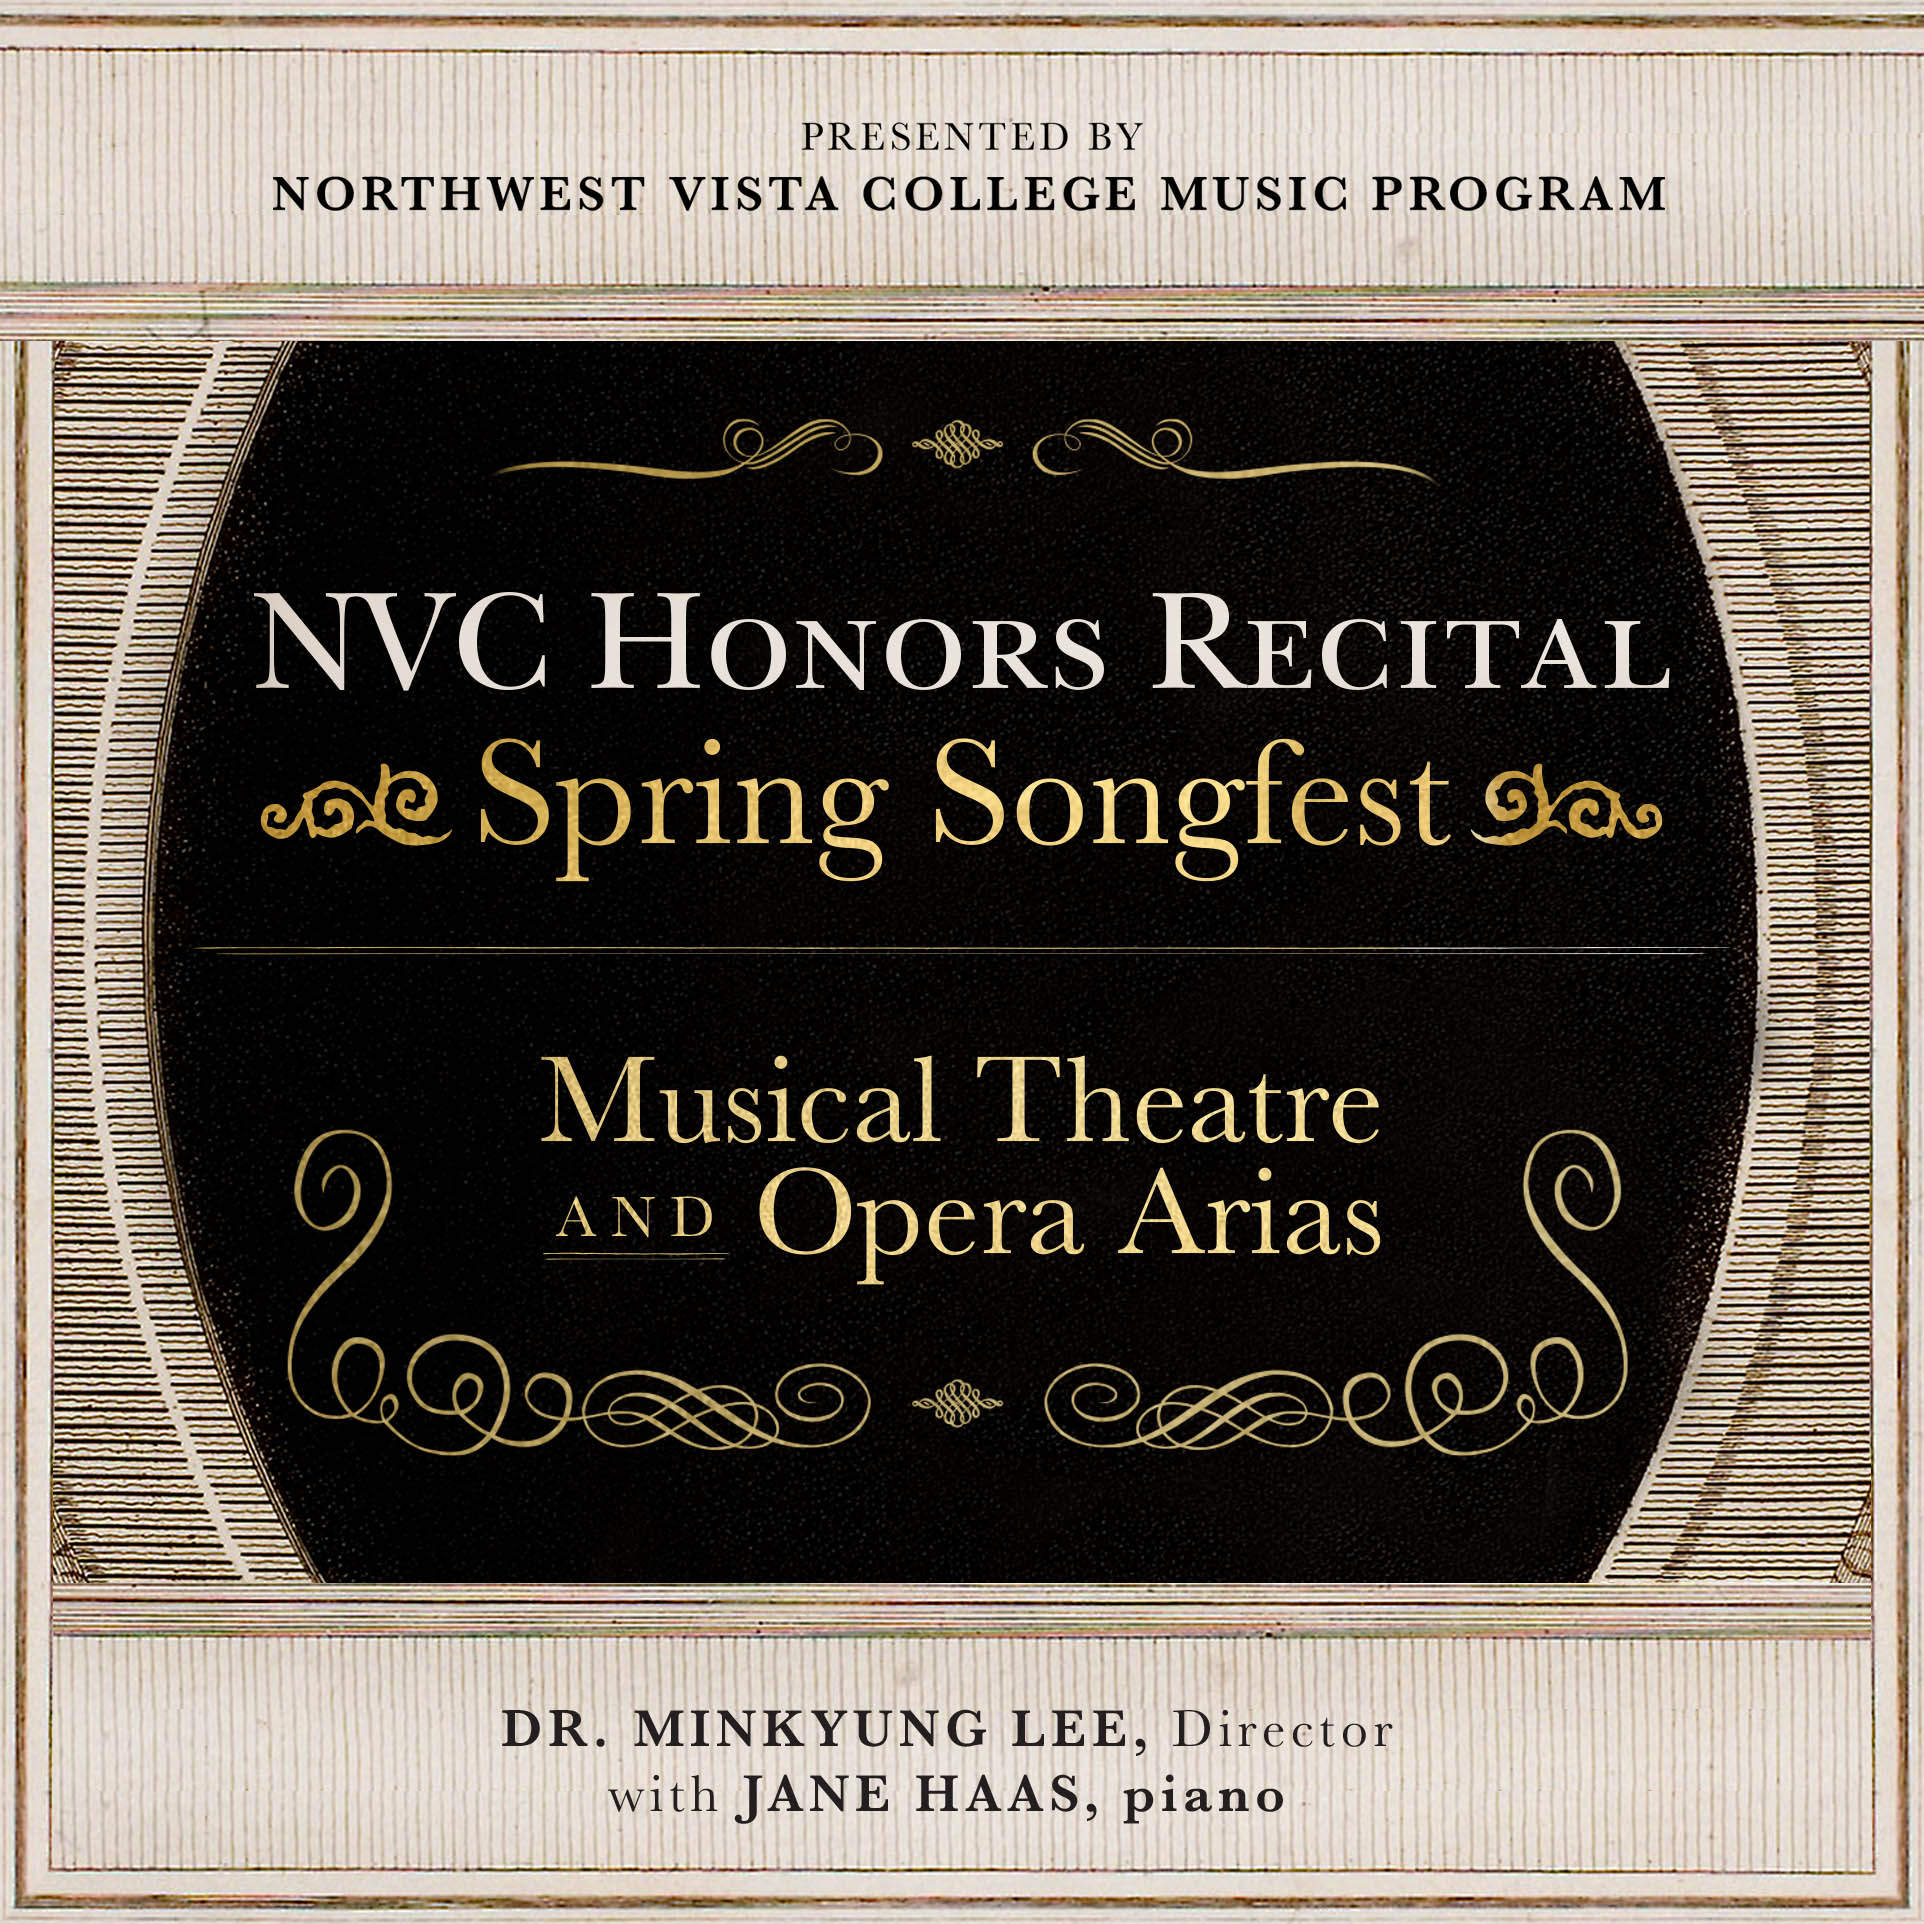 NVC HR Recital